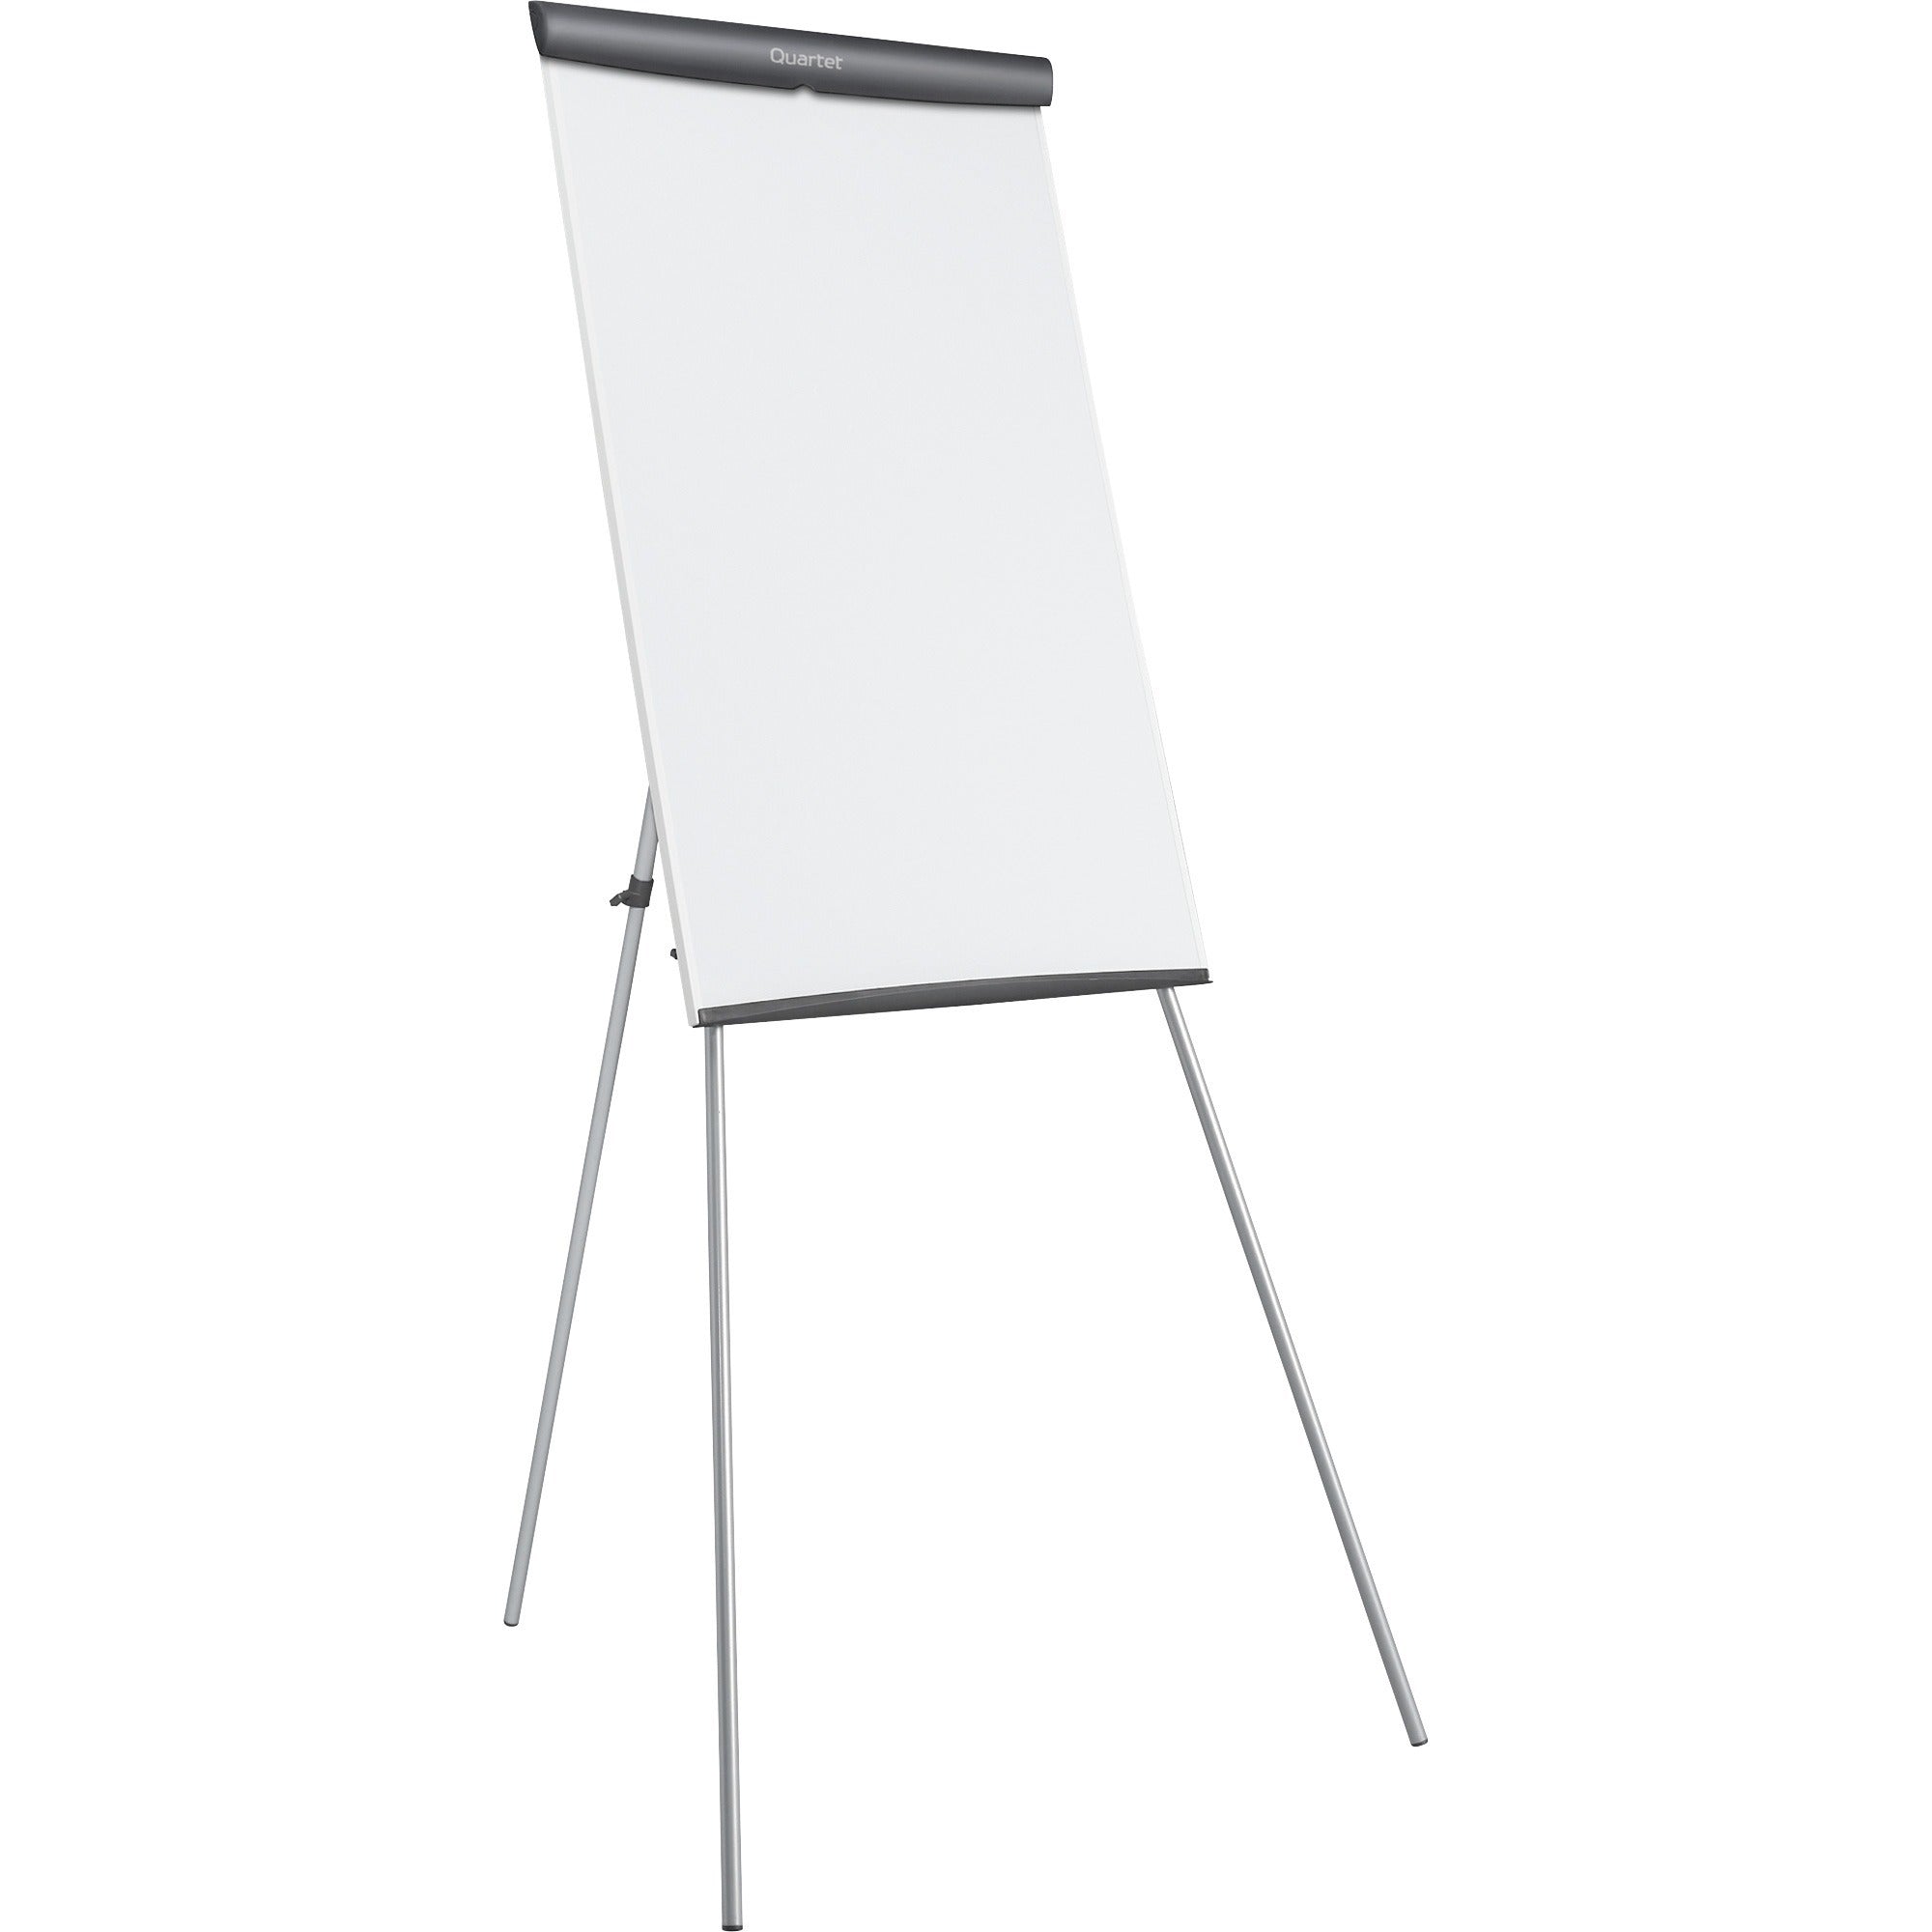 quartet-whiteboard-flip-chart-presentation-easel-24-2-ft-width-x-36-3-ft-height-white-melamine-surface-gray-frame-rectangle-assembly-required-1-each_qrtet32eu - 2